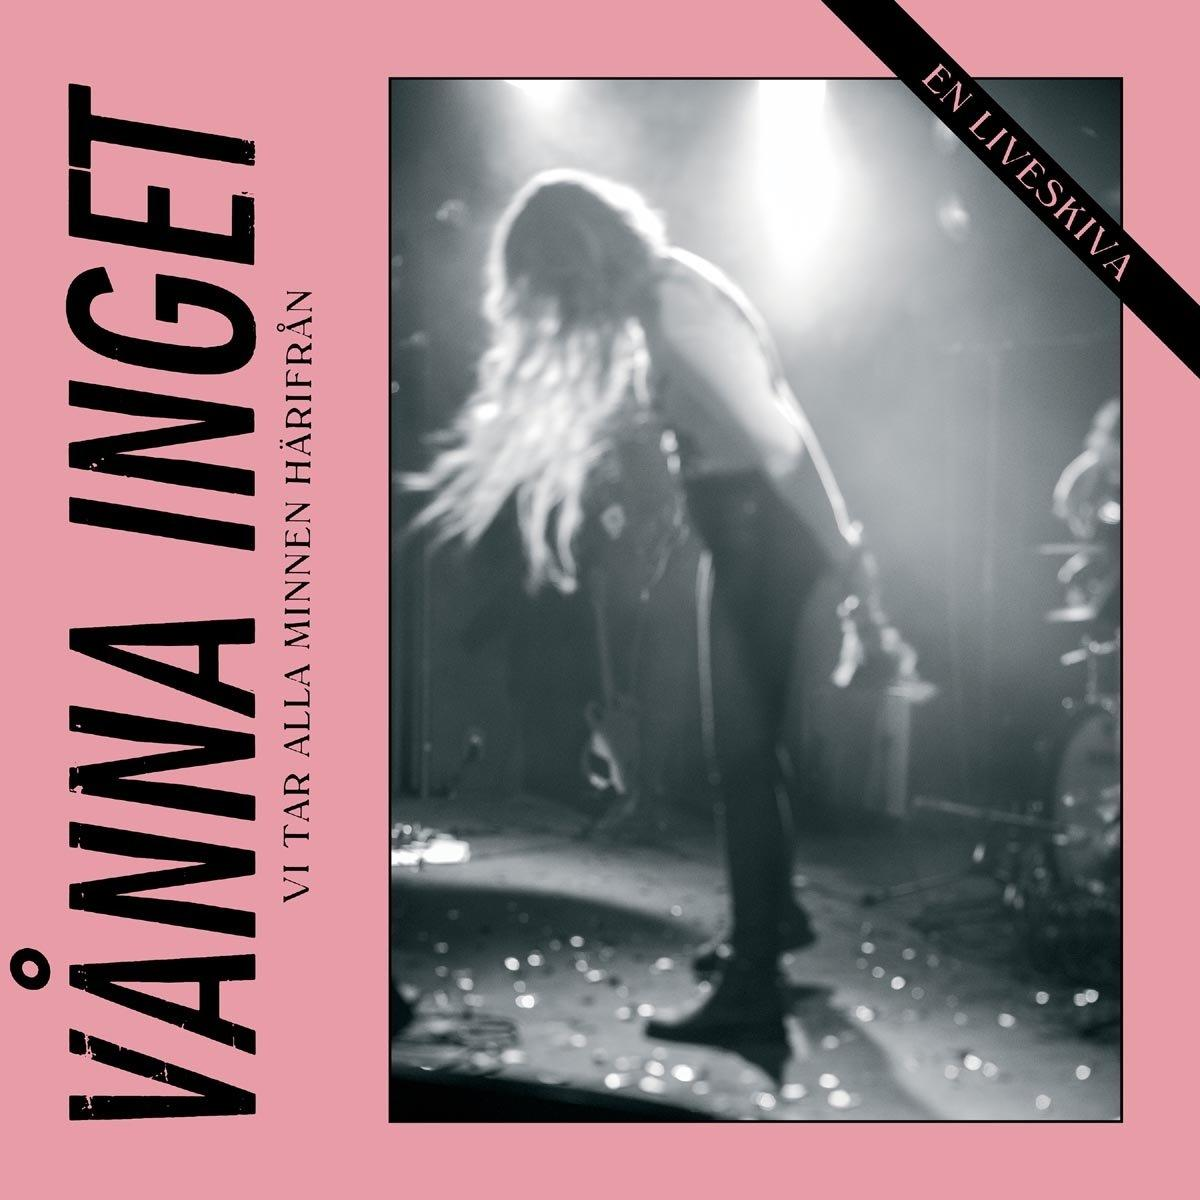 Vanna Inget - VI - (White (Live) Ar Alla Vinyl) Härifran (Vinyl) Minnen